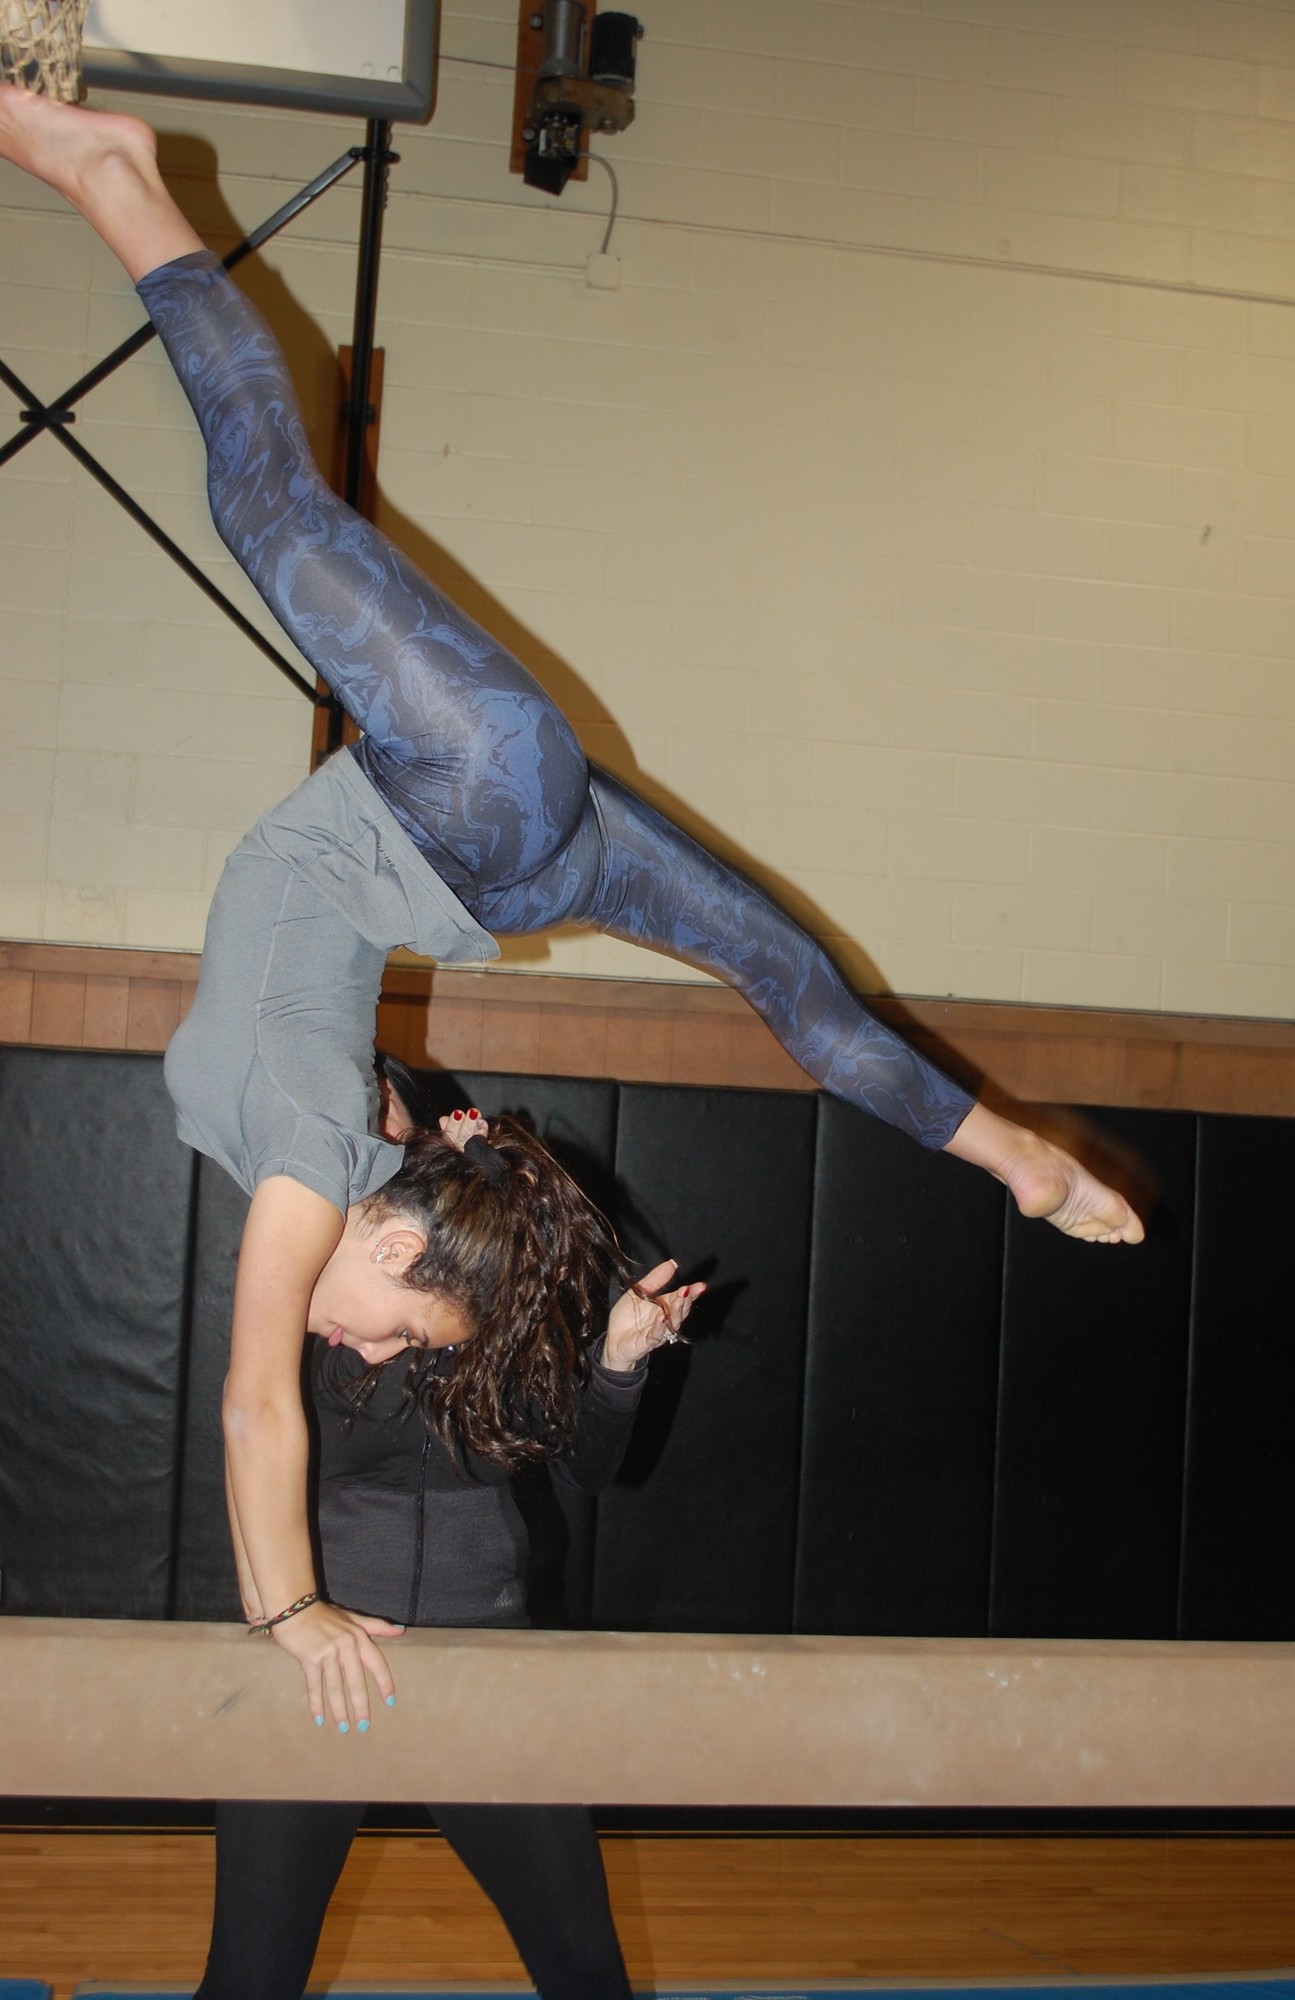 Ashley Hayden showed off her skills on the balance beam.